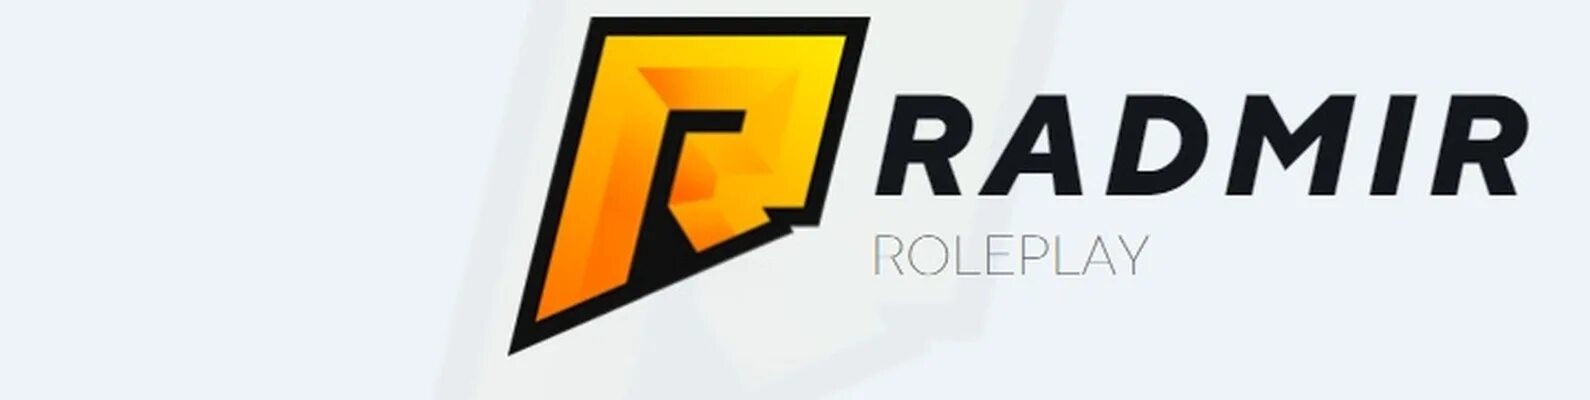 Forum radmir 5. Радмир. Логотип Радмира. Рпдмир р. Логотип RADMIR Rp.